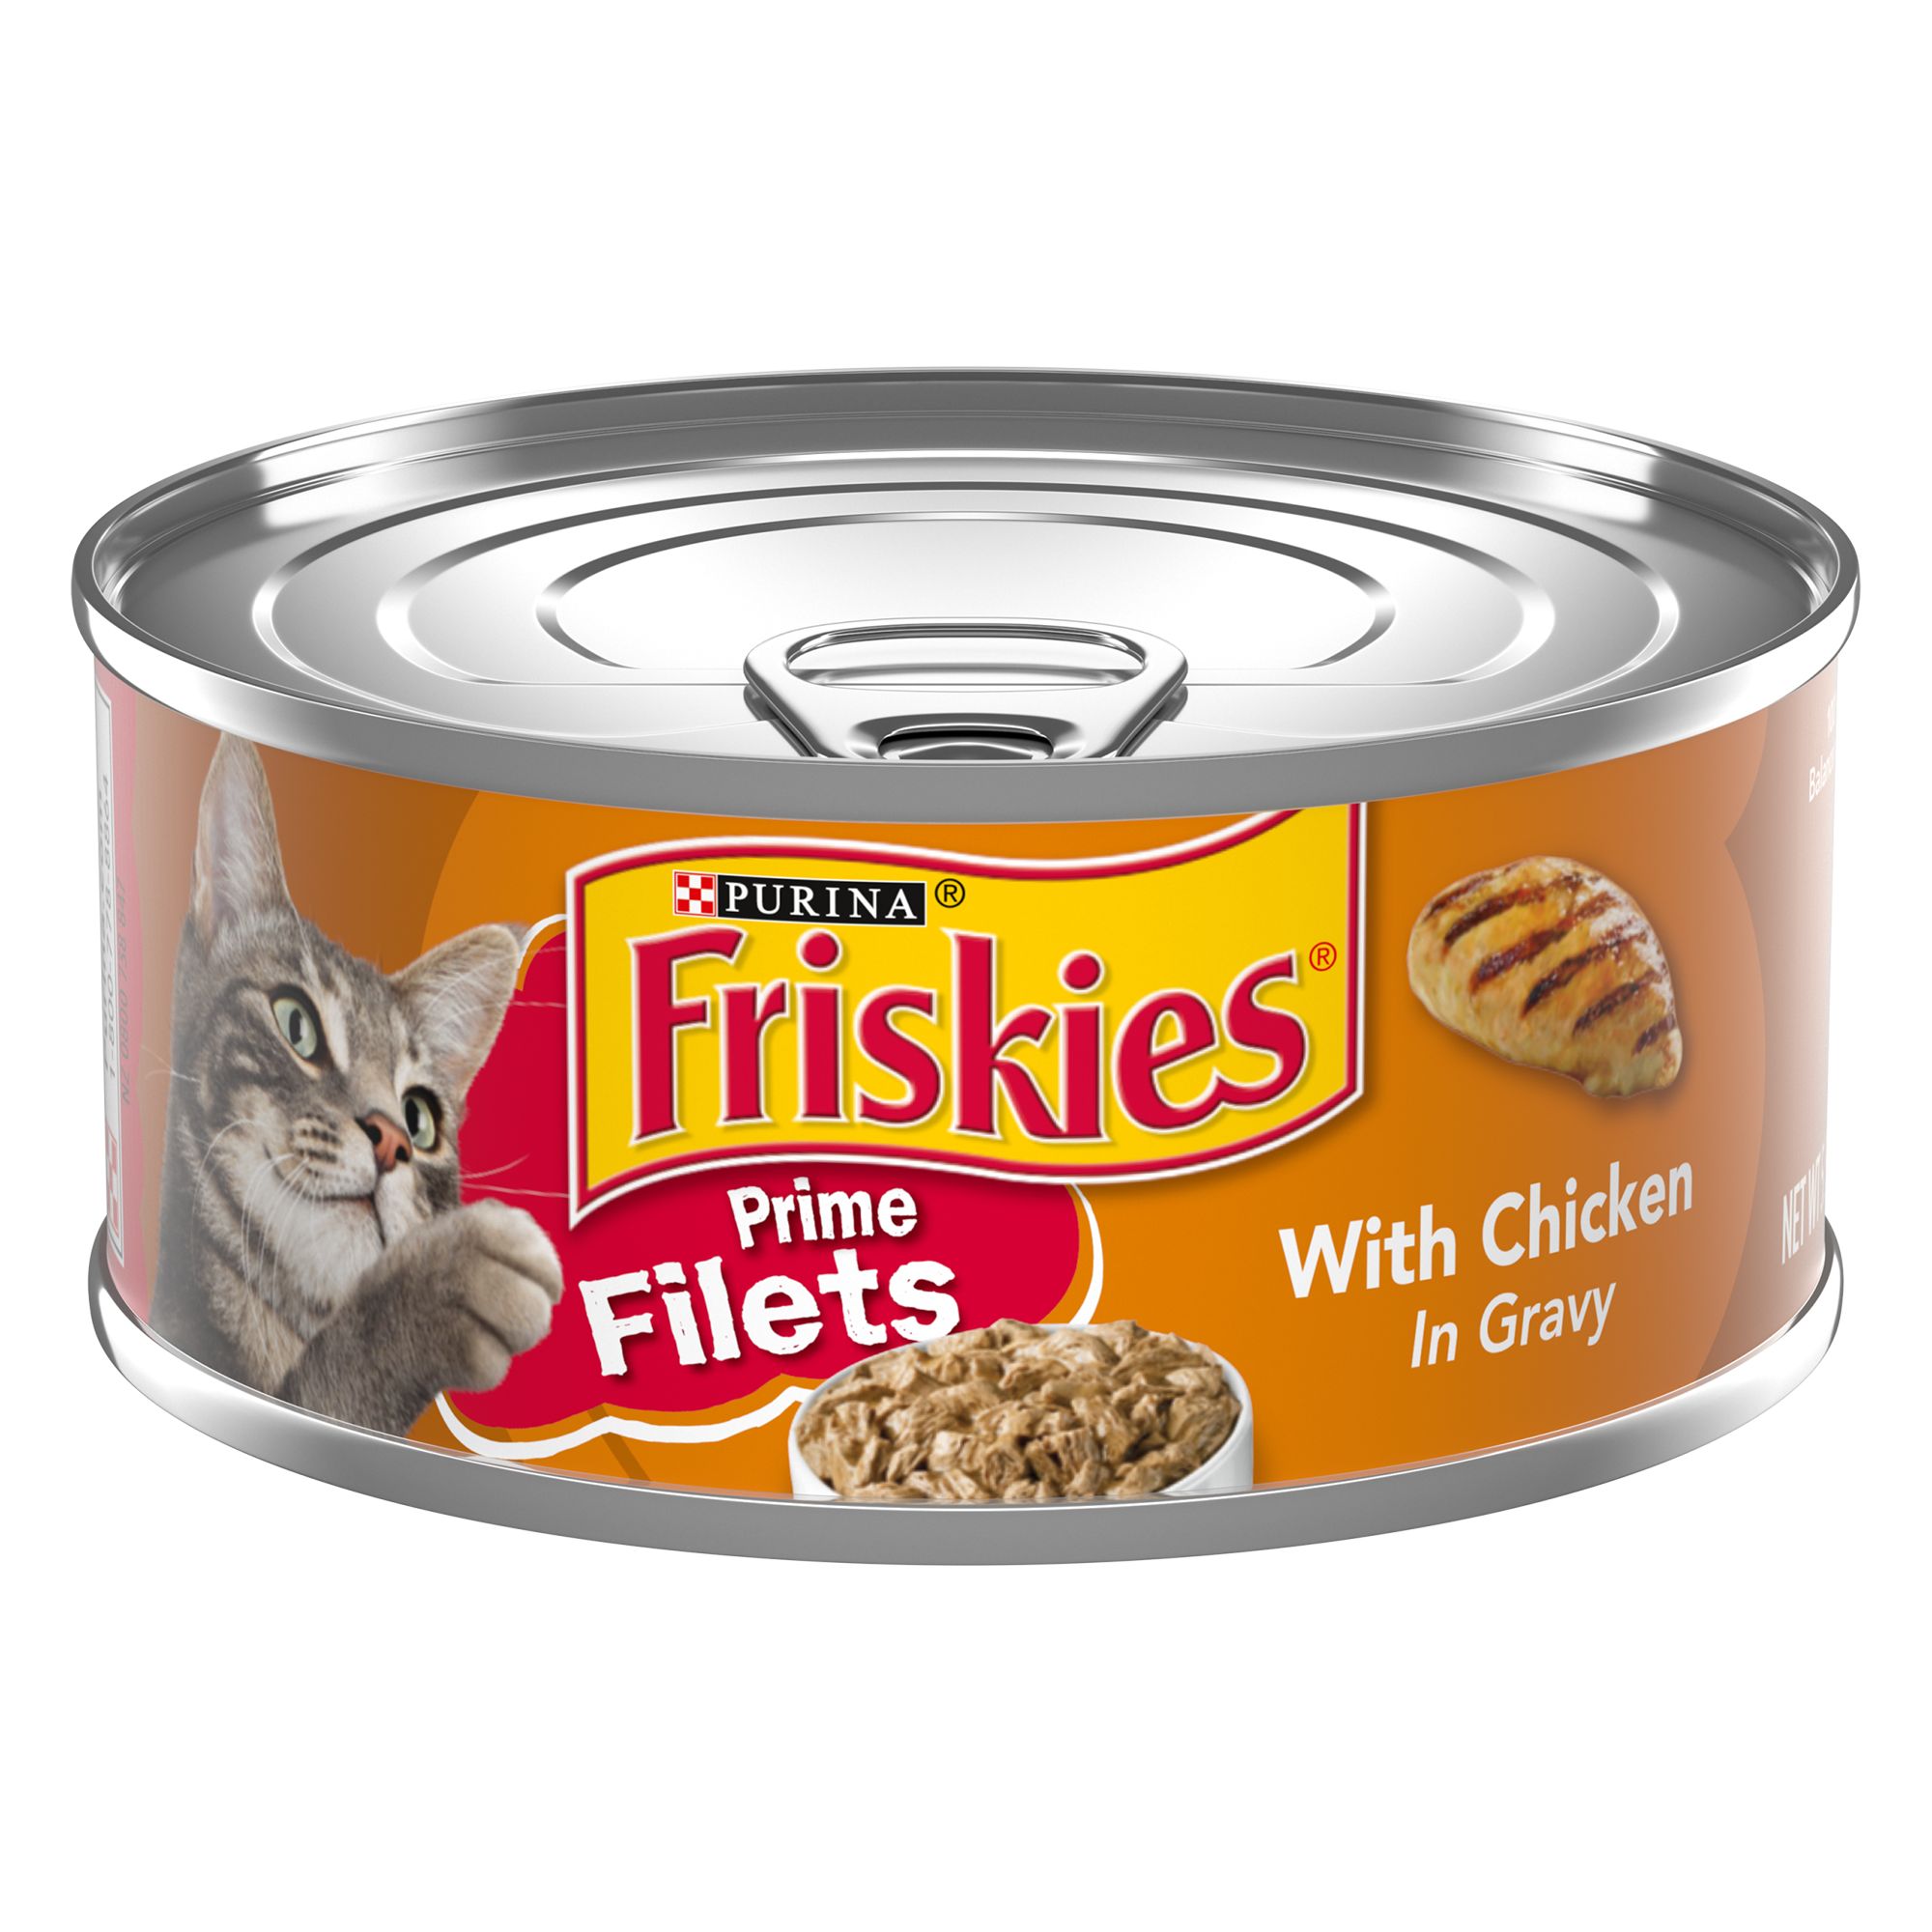 wholehearted cat food petsmart